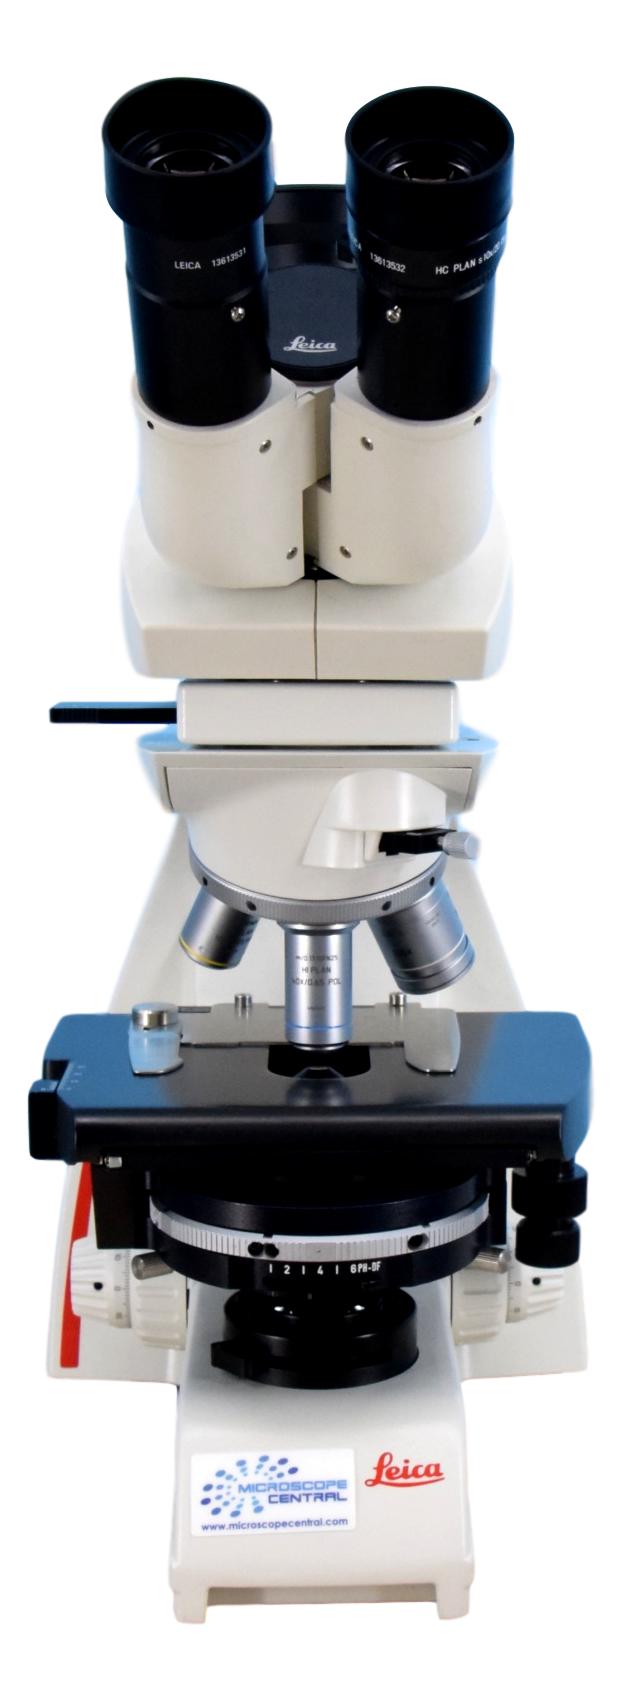 Leica DM750 DIC Microscope